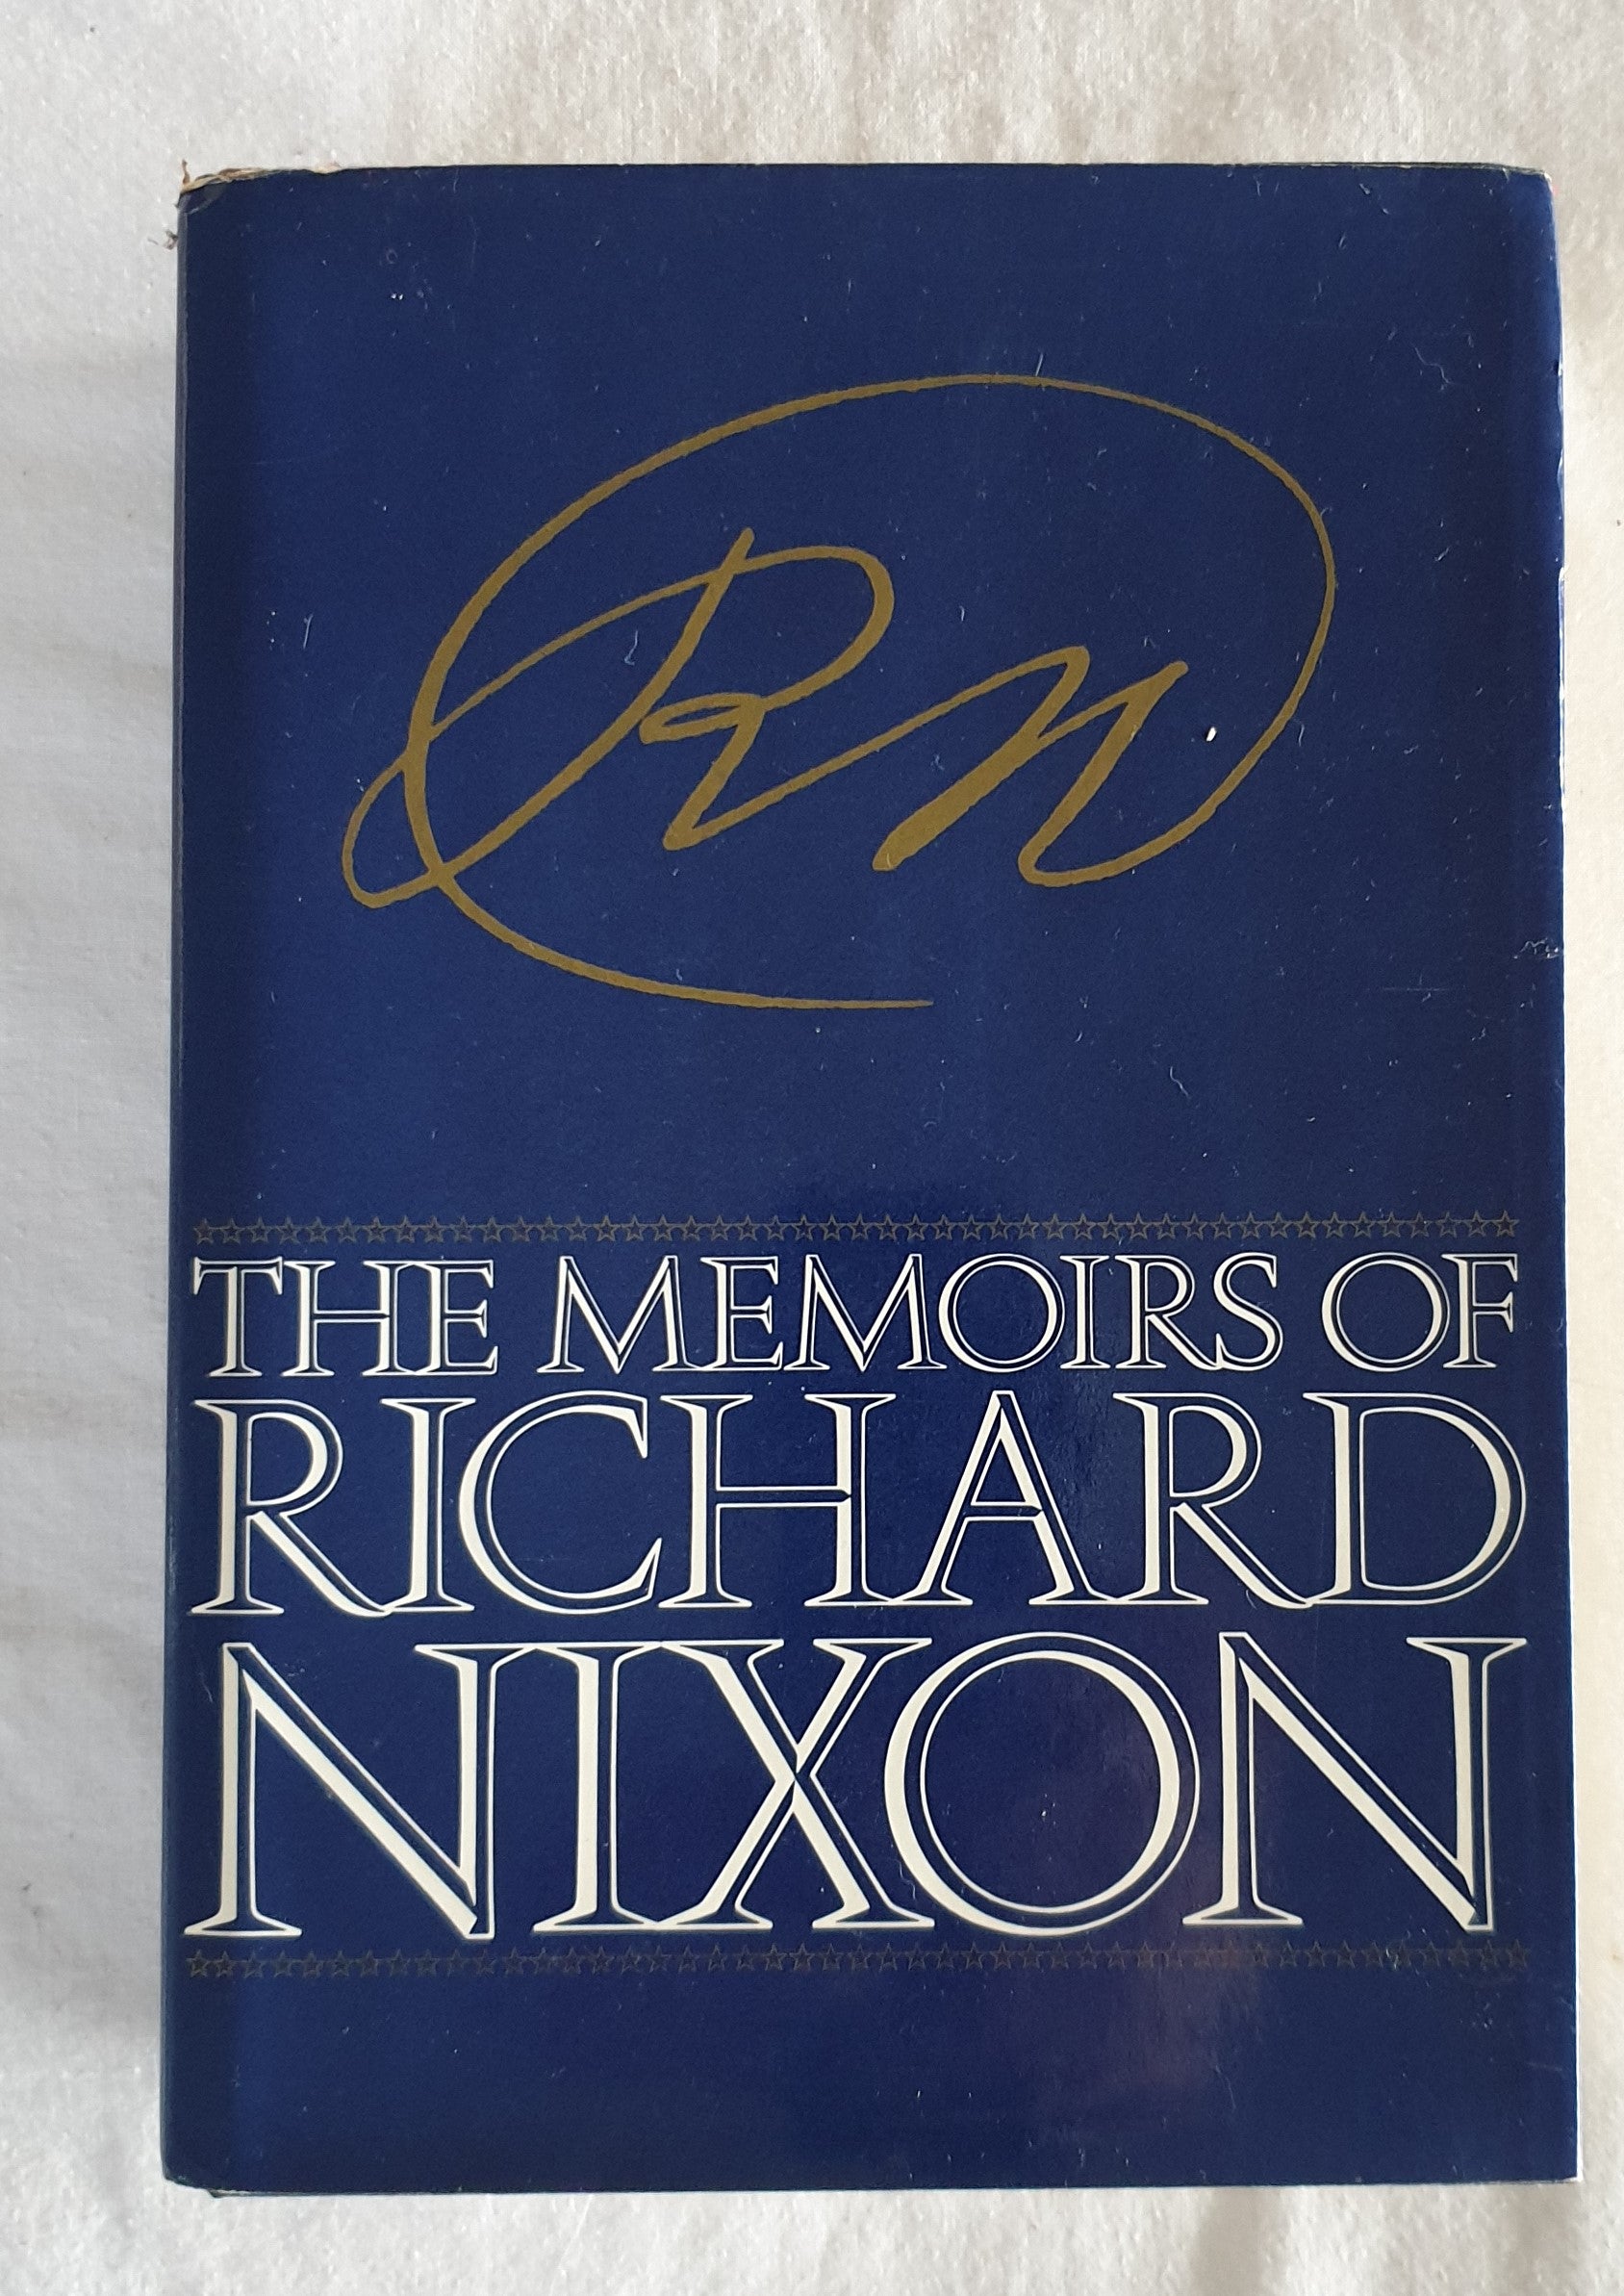 The Memoirs of Richard Nixon by Richard Nixon